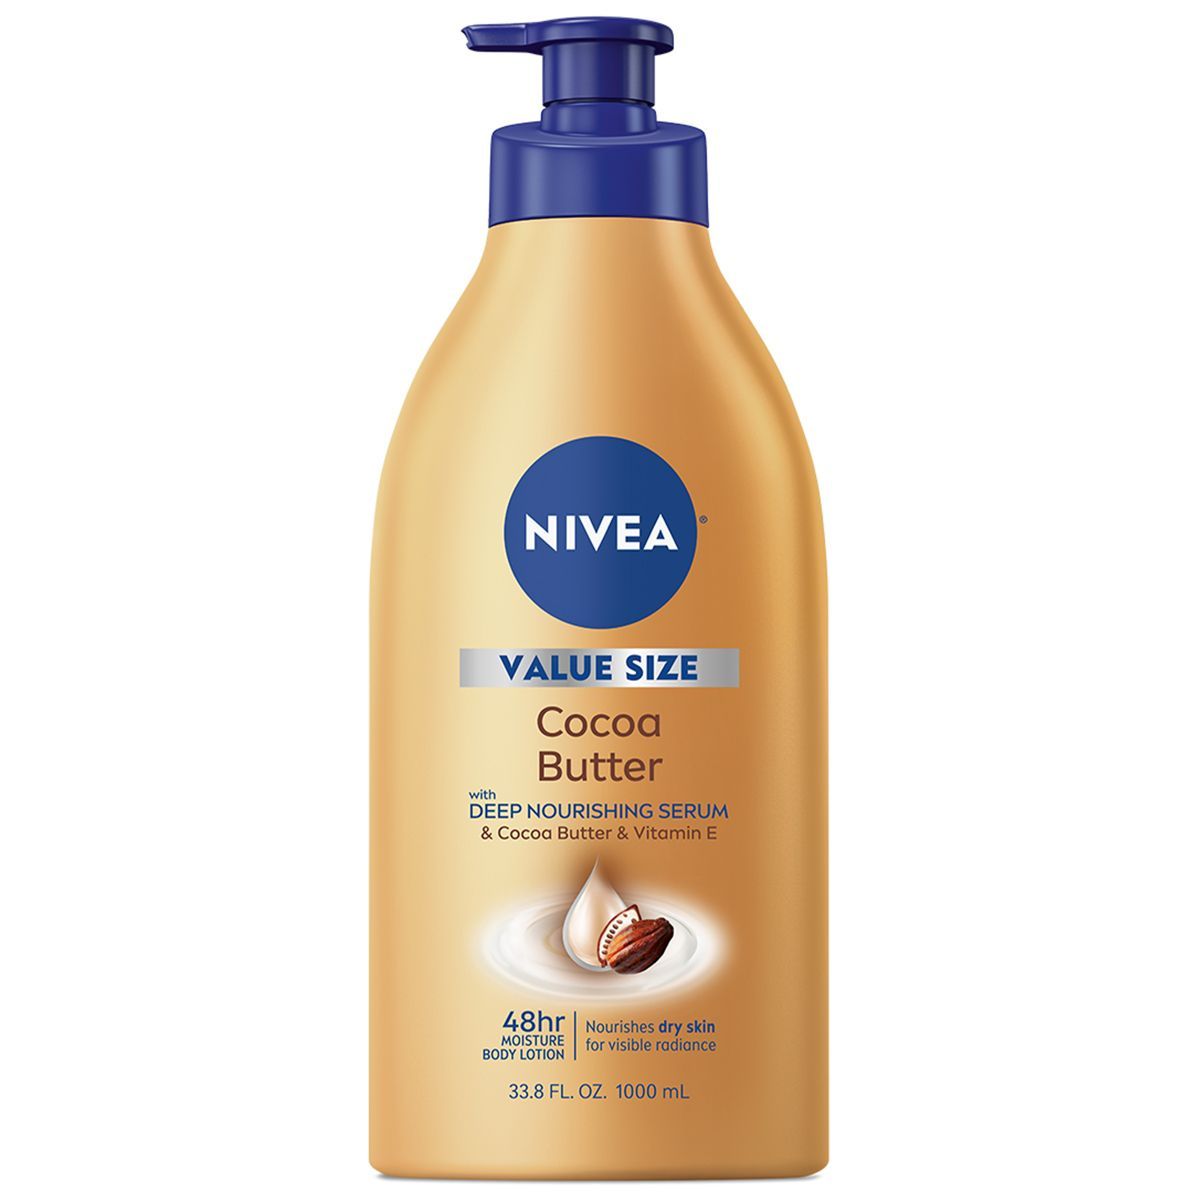 NIVEA Cocoa Butter Body Lotion with Deep Nourishing Serum - 33.8 fl oz | Target